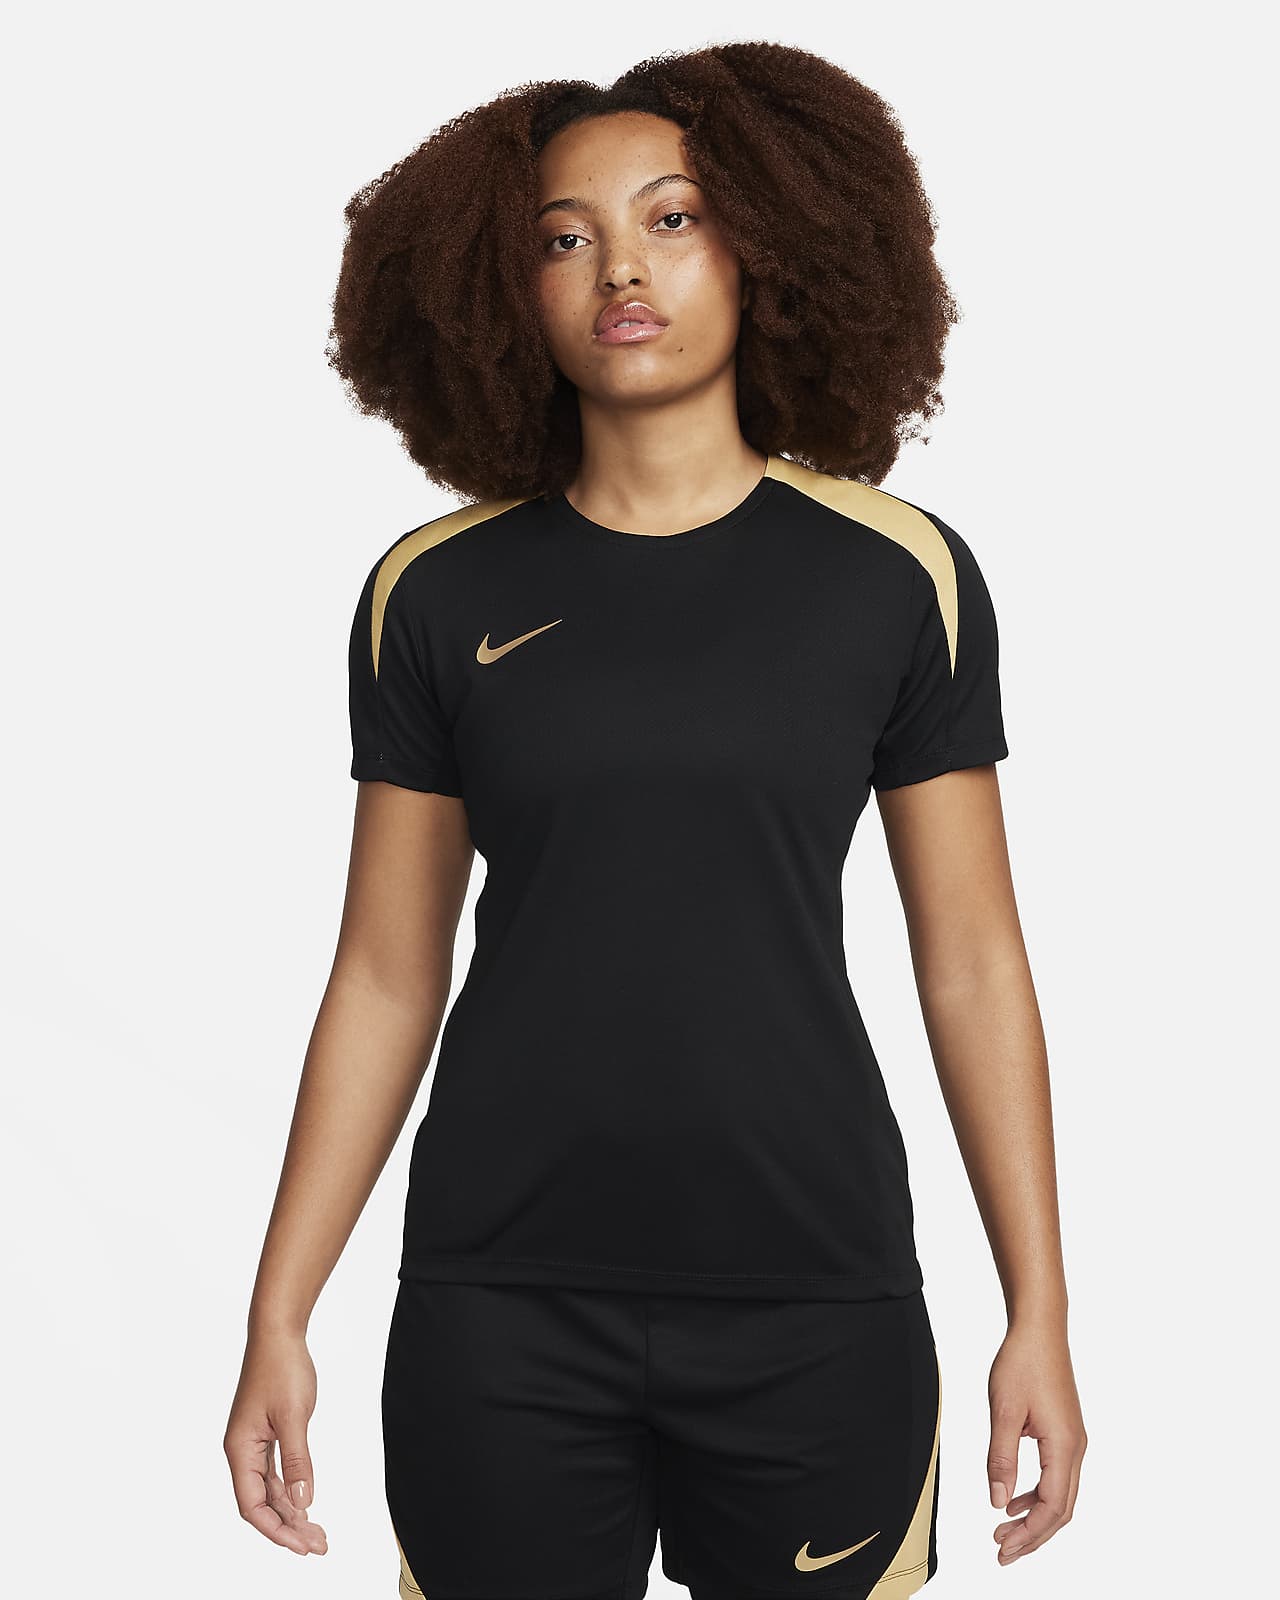 Nike Strike Dri-FIT rövid ujjú női futballfelső